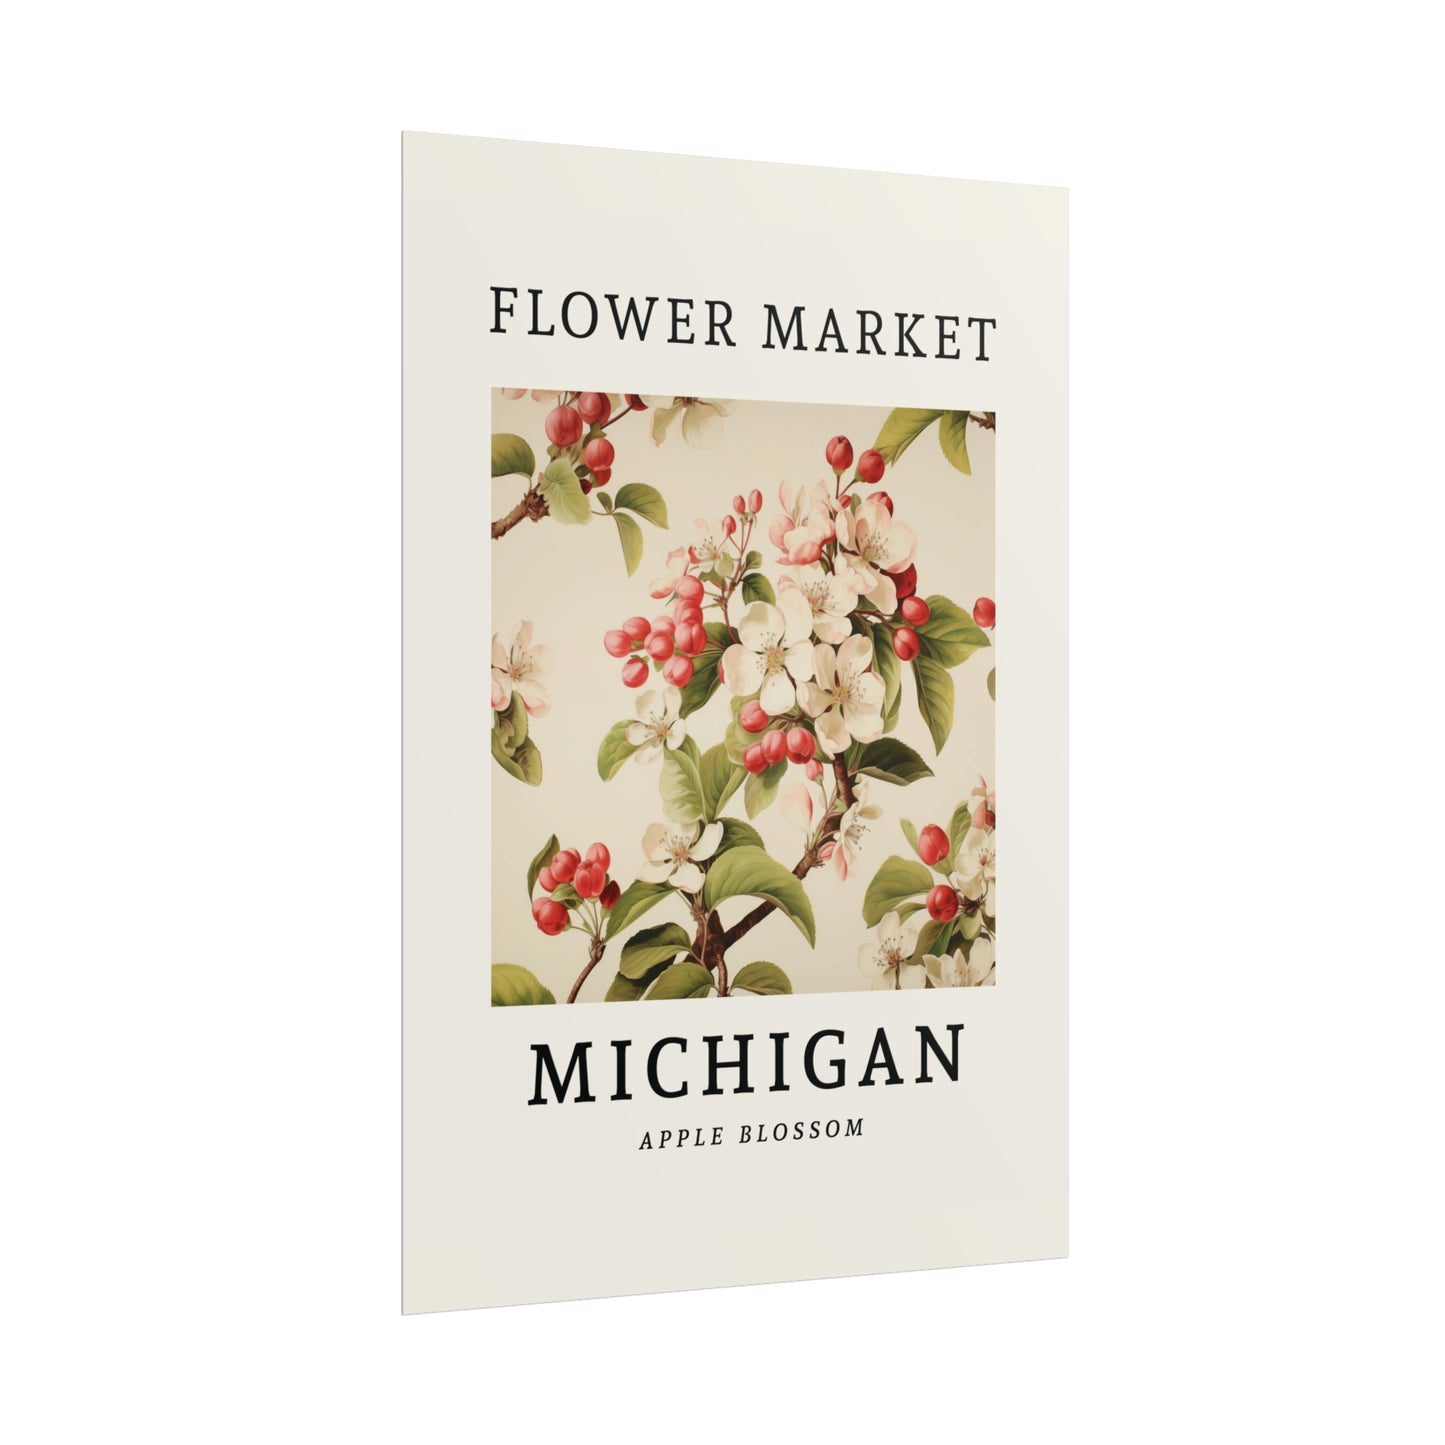 MICHIGAN FLOWER MARKET Poster Apple Blossom Blooms Print